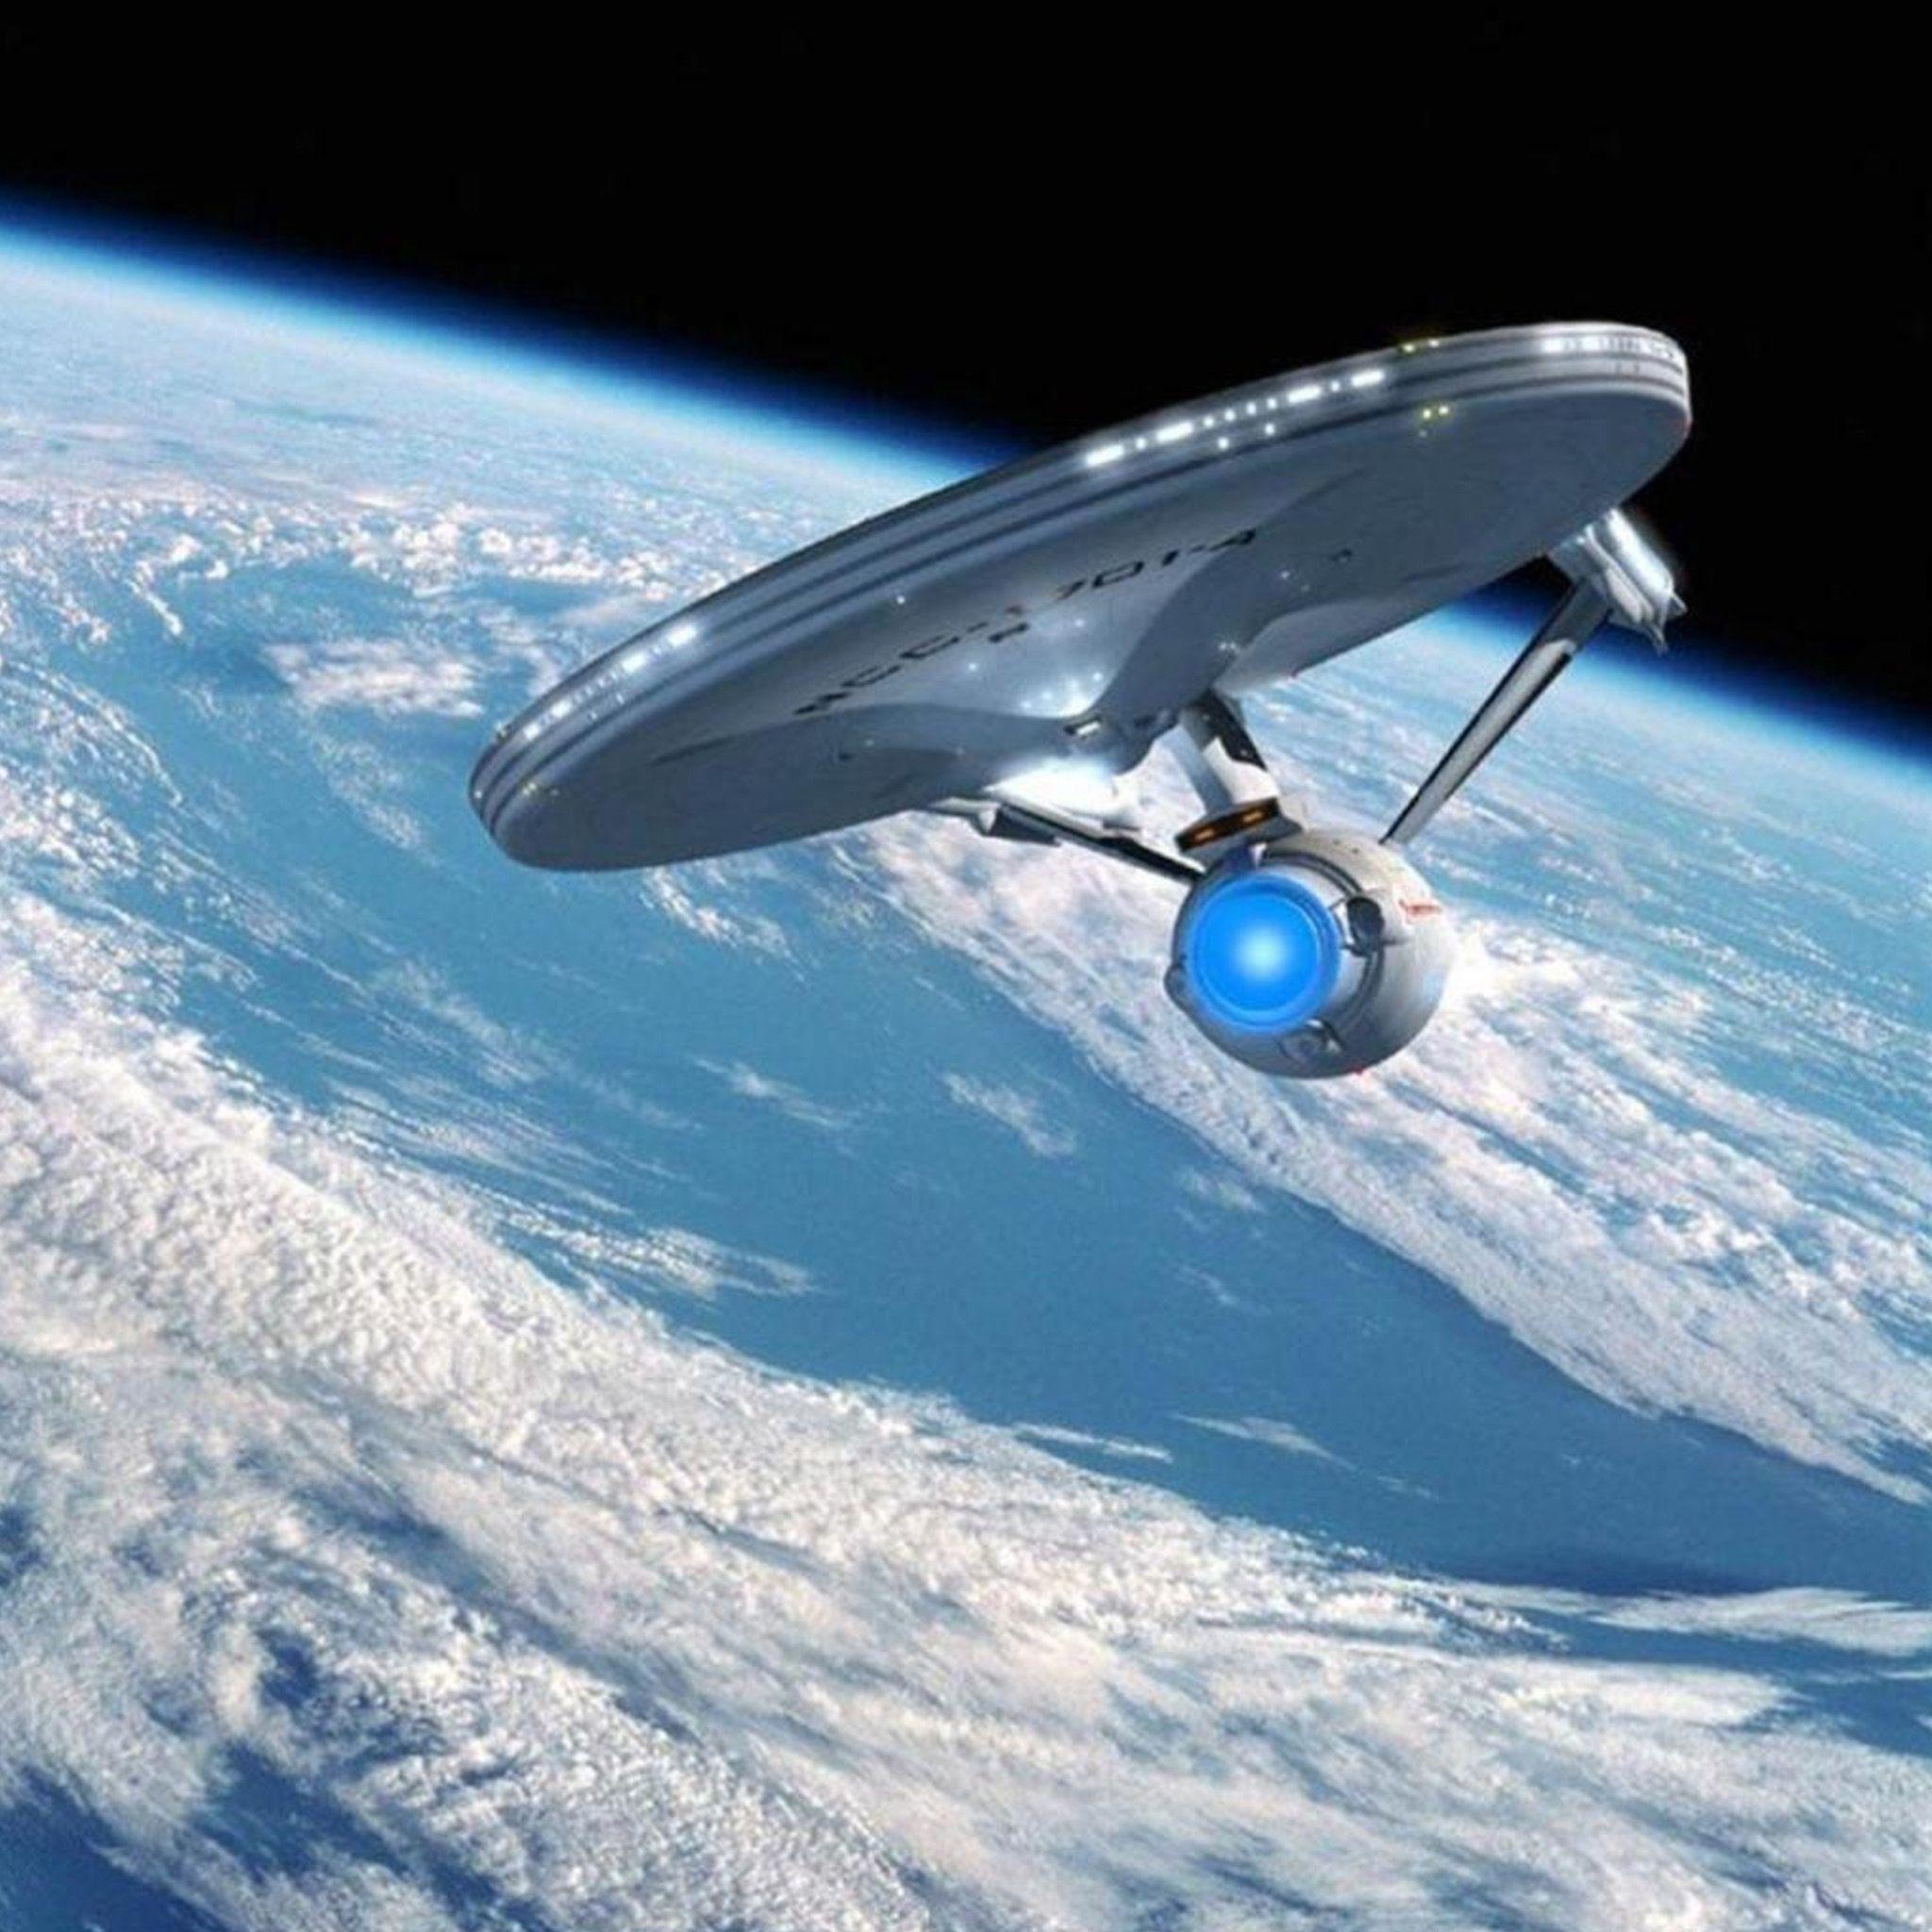 iWallpaper Enterprise spaceship Trek wallpaper. iPad